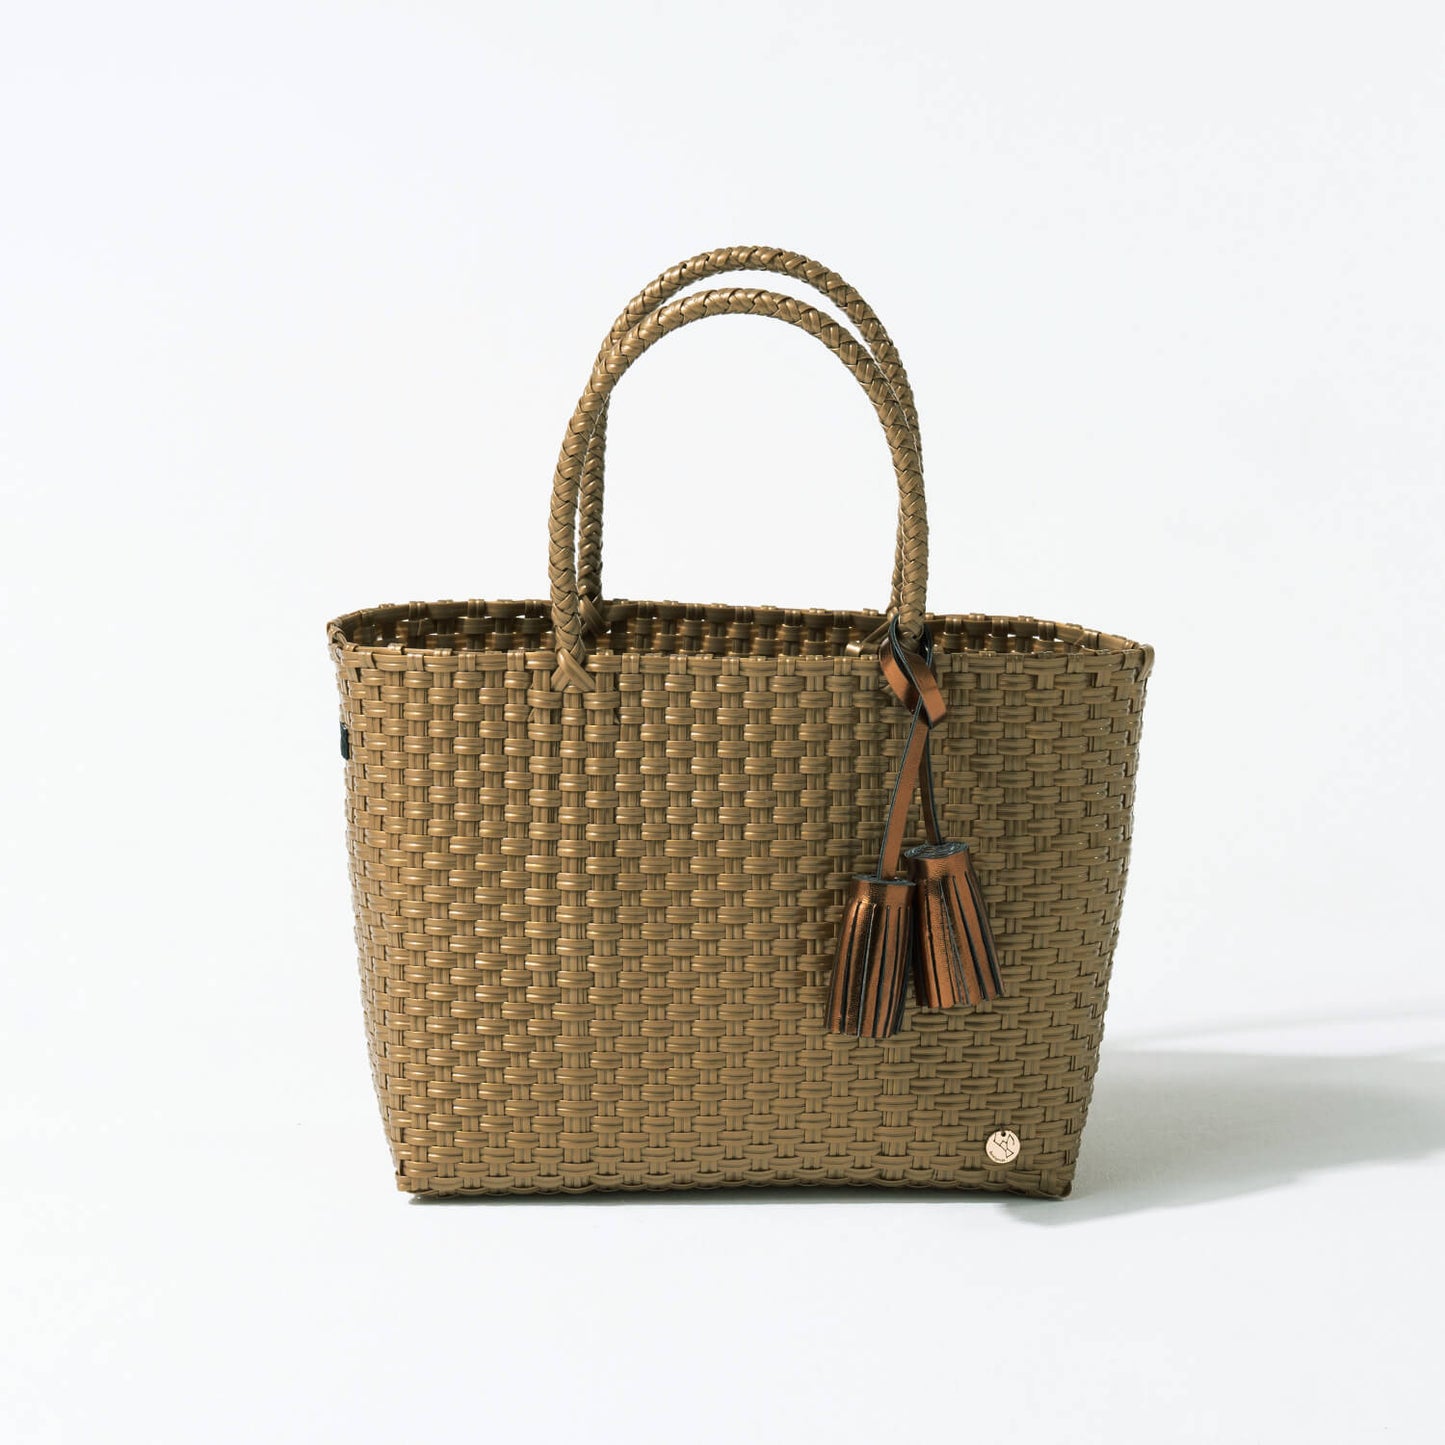 Mercado bag 「Bacerra S size」 Color: Bronze gold